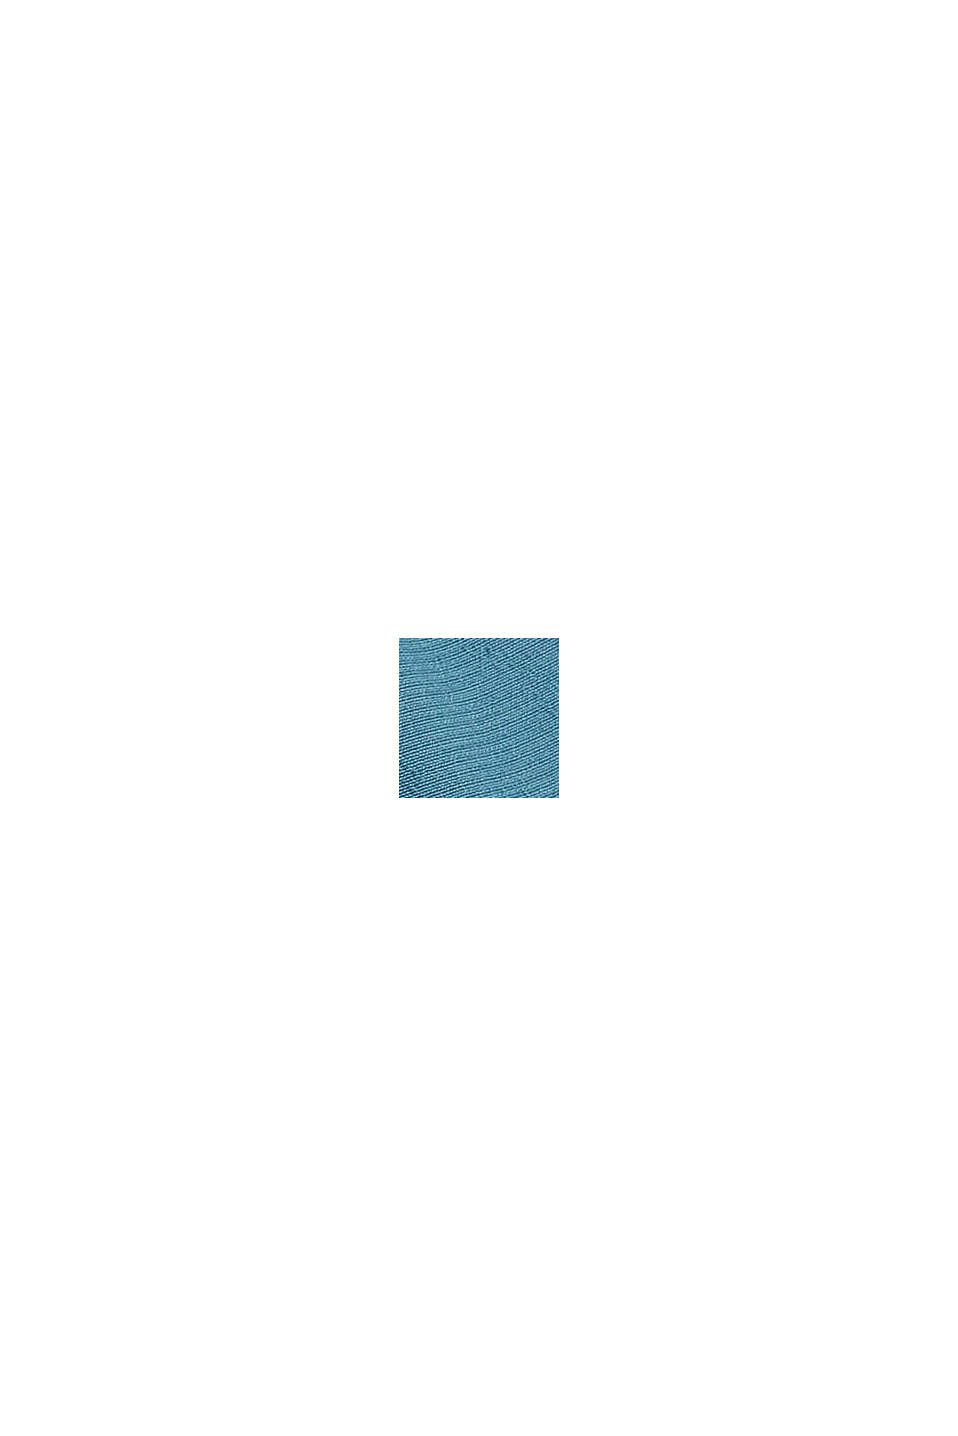 Halenka s vlákny LENZING™ ECOVERO™, PETROL BLUE, swatch